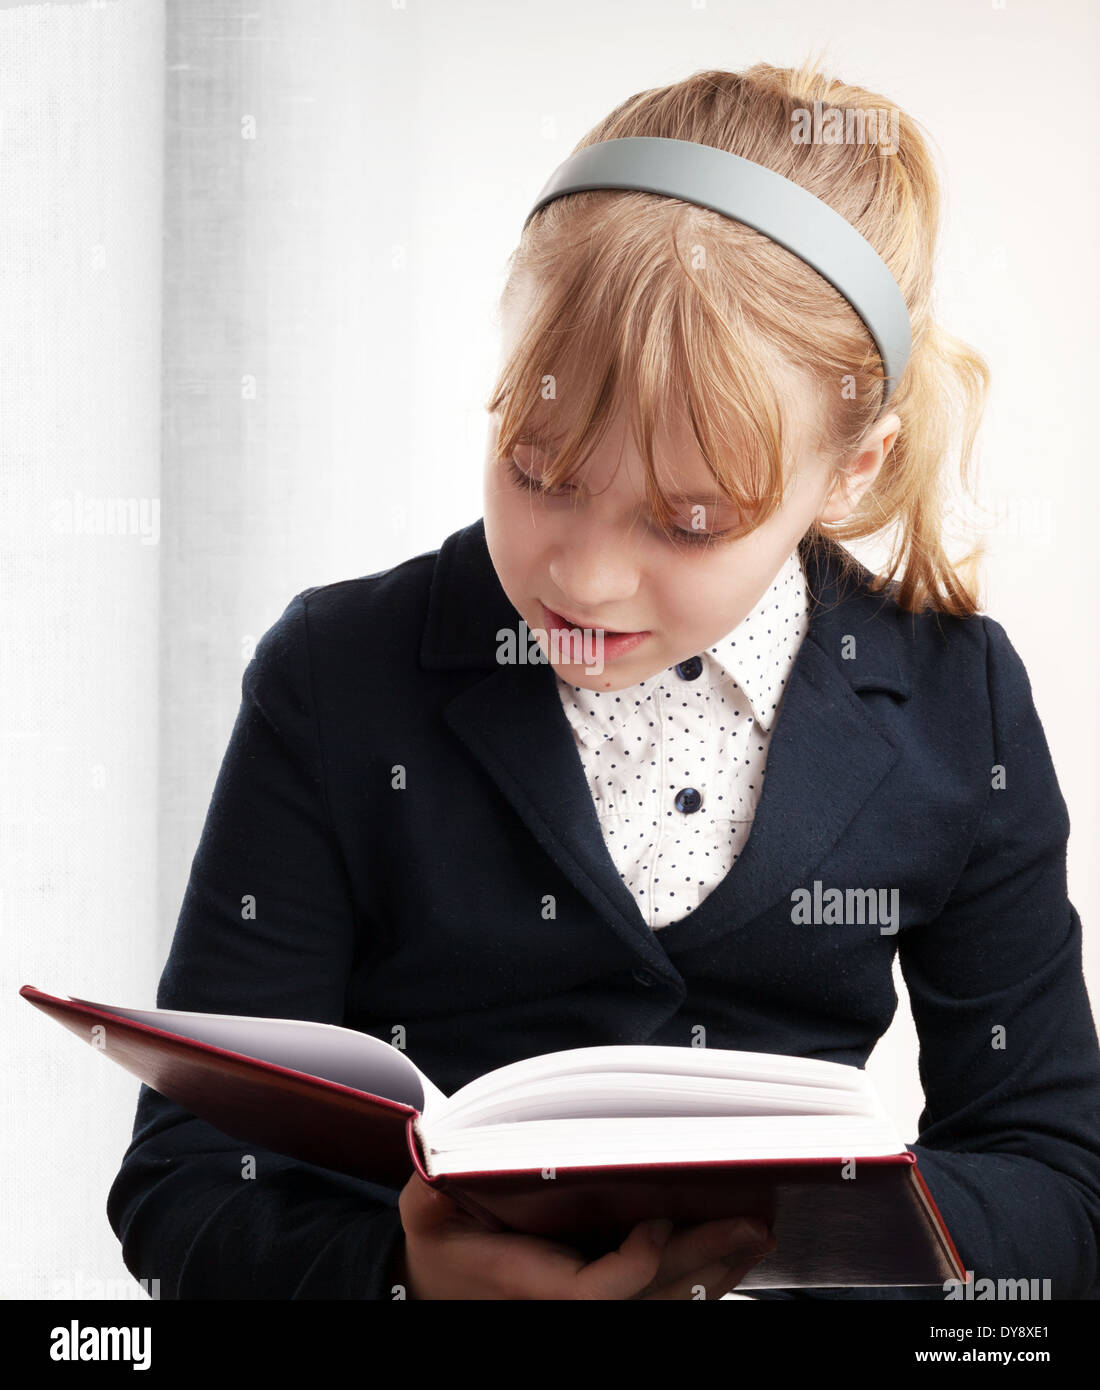 Closeup portrait of blond Caucasian schoolgirl reading textbook Stock Photo